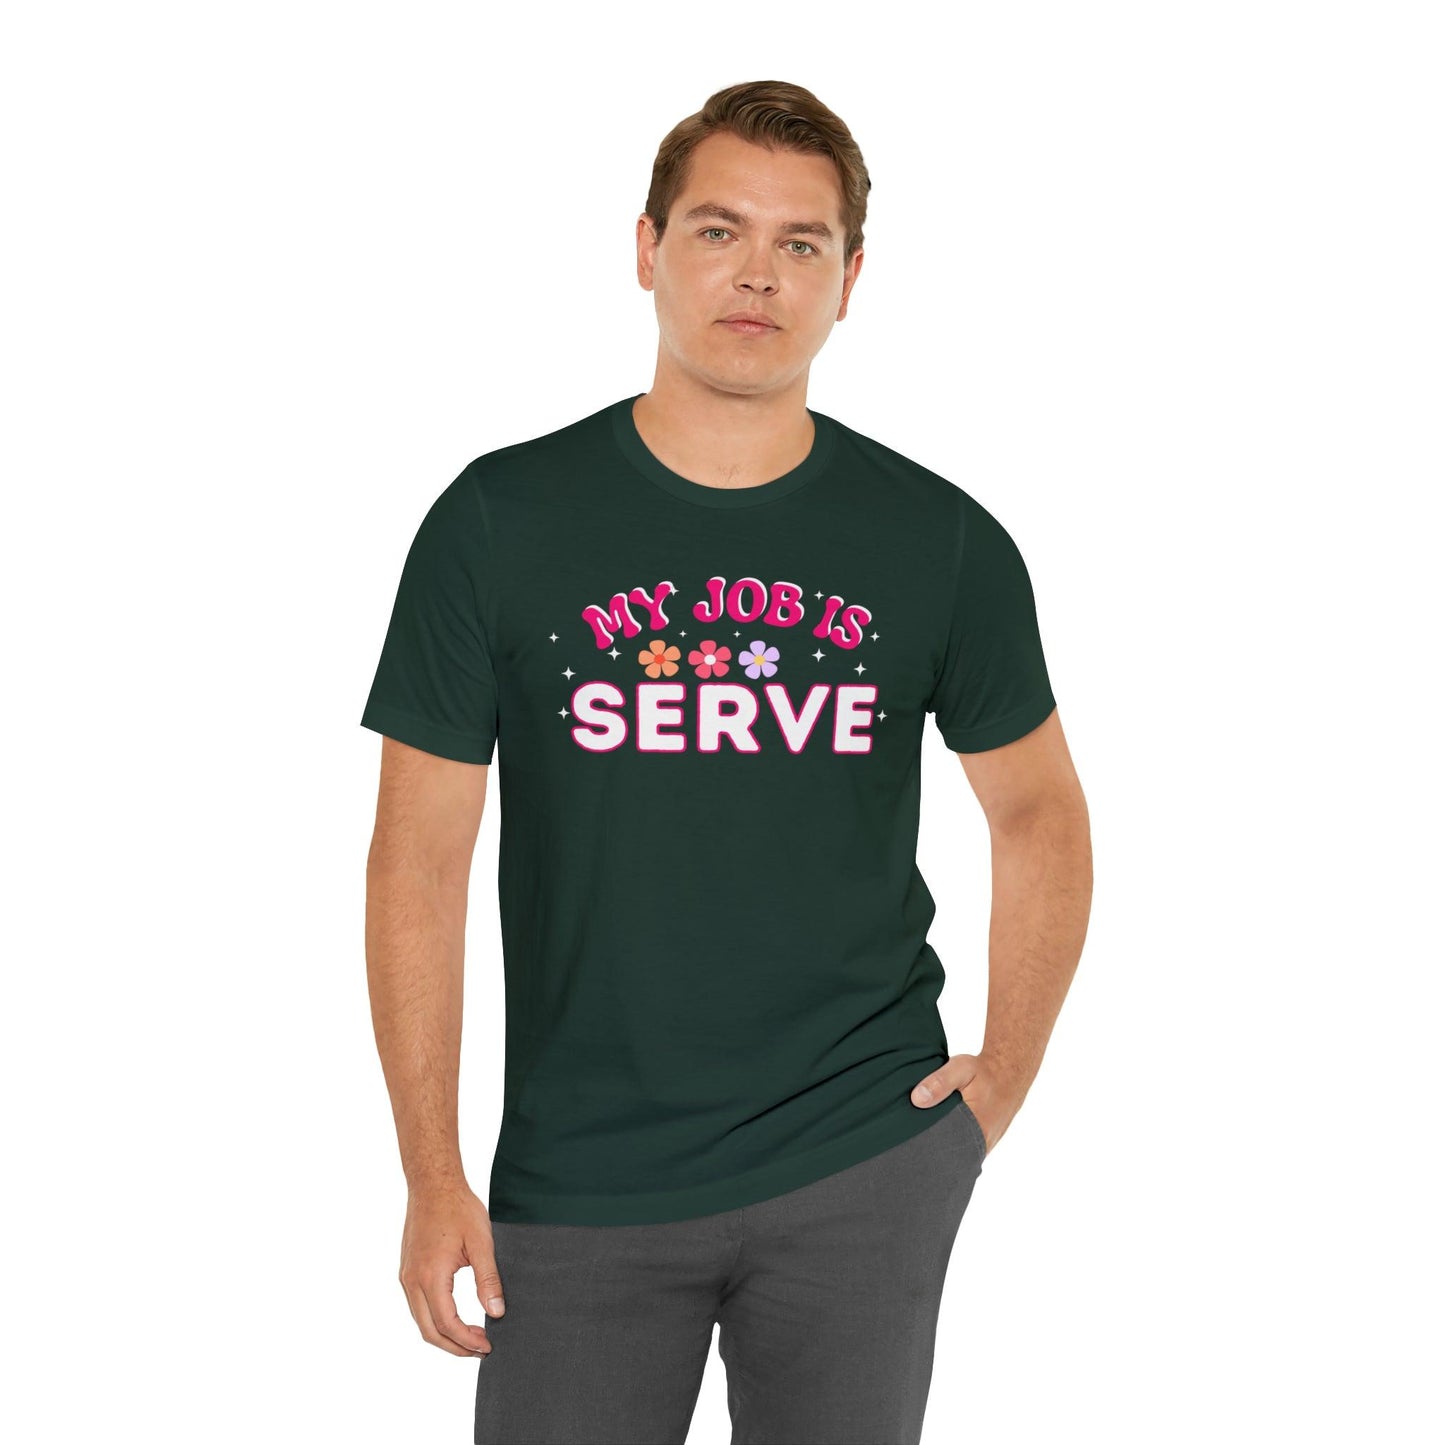 My Job is Serve Shirt for Military Customer Service Waiter/Waitress Public Servant, Hotel Concierge, Caterer, Flight Attendant, Bartender Barista - Giftsmojo